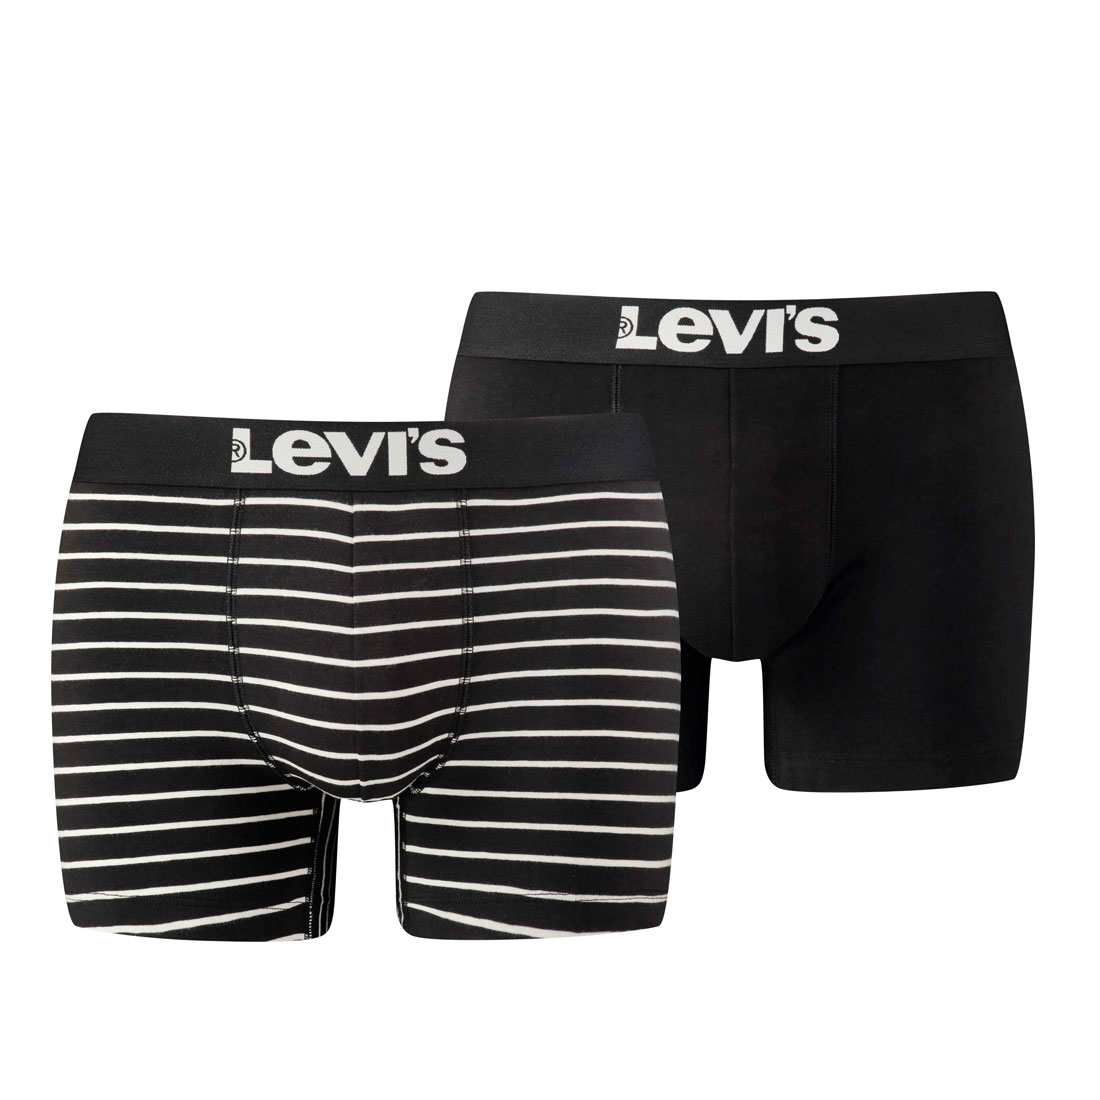 2er Pack Levis Men Vintage Stripe YD B Boxer Brief Boxershorts Unterhose Pant Unterwäsche M, 884 - jet black von Levi's